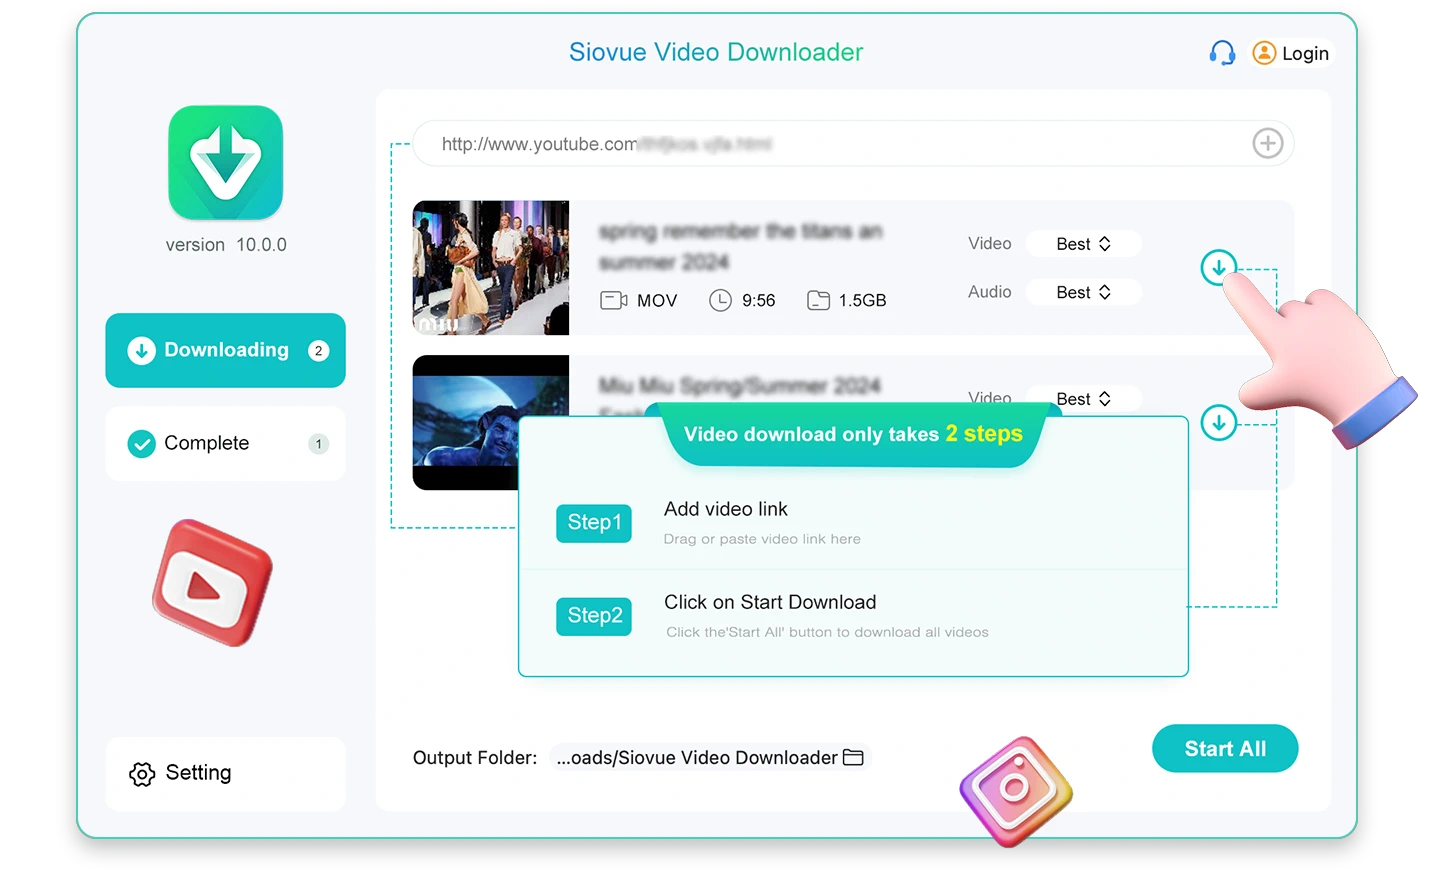 Siovue Video Downloader adds video links